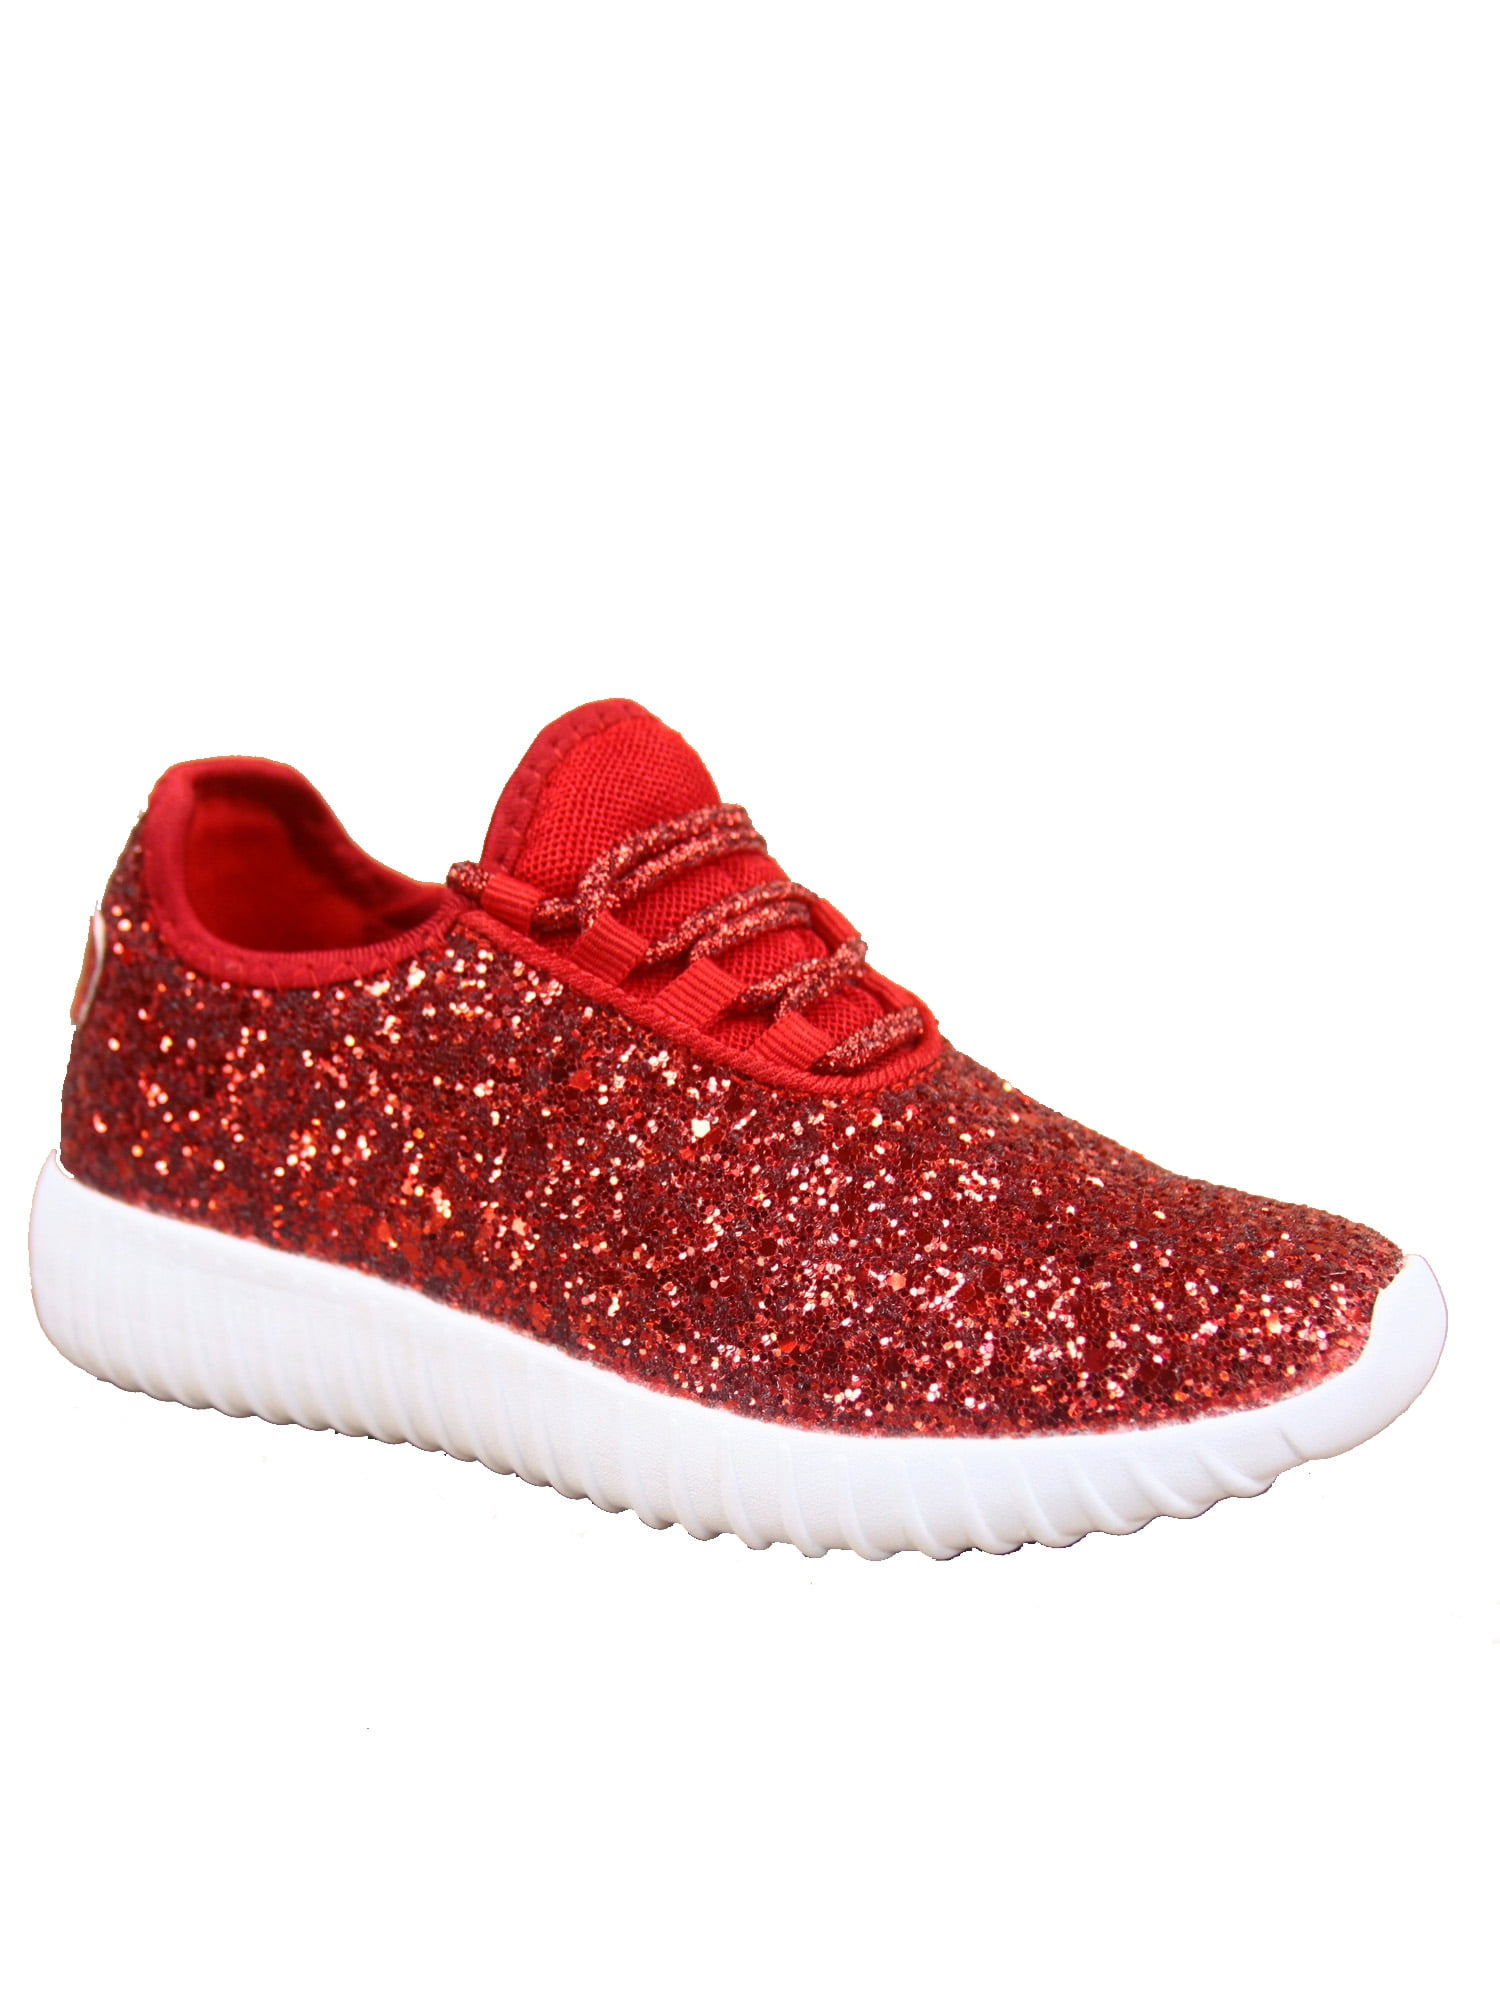 Red Glitter Shoes - Walmart.com